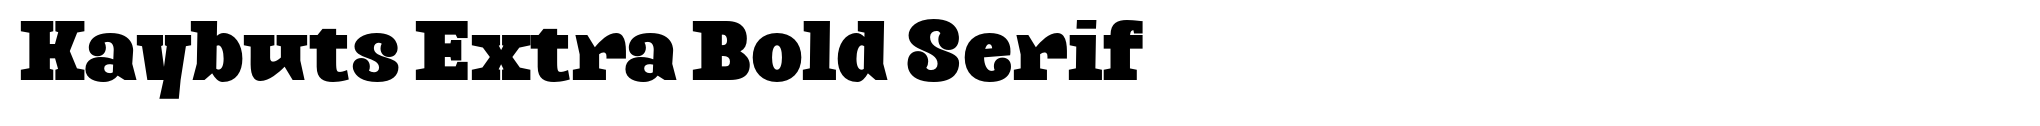 Kaybuts Extra Bold Serif image